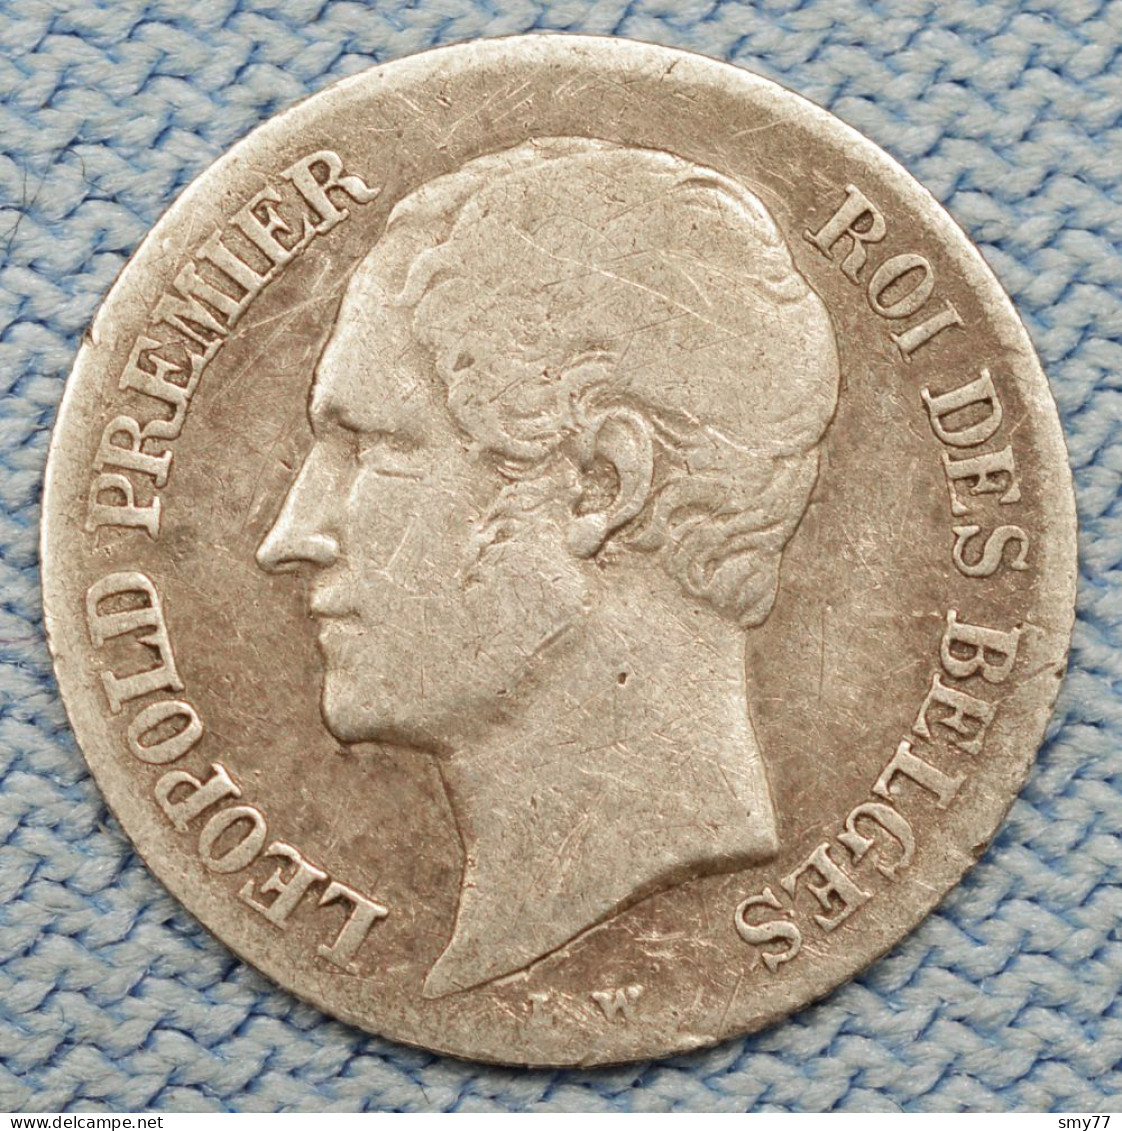 Belgique / Belgium • 20 Centimes 1853 • [24-629] - 20 Centimes